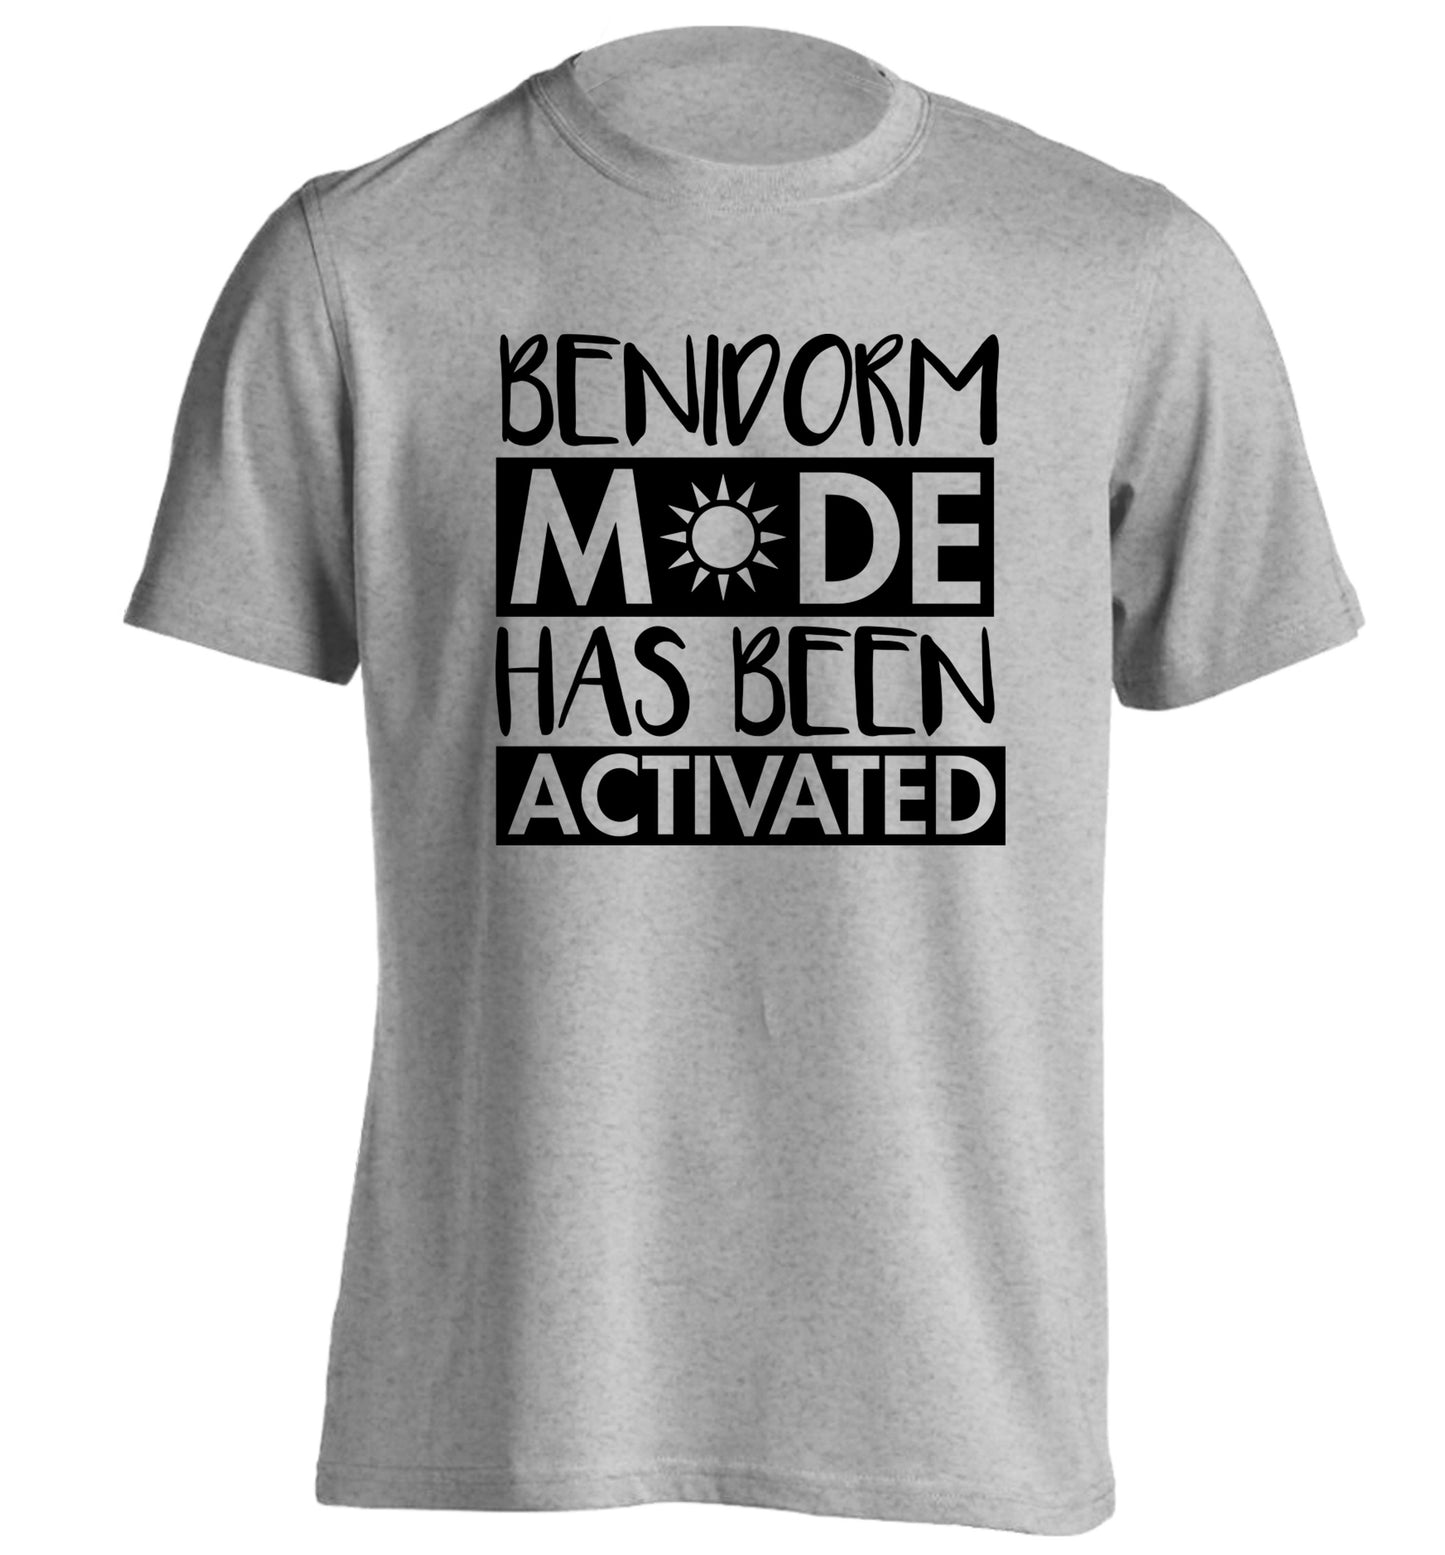 Benidorm mode has been activated adults unisex grey Tshirt 2XL